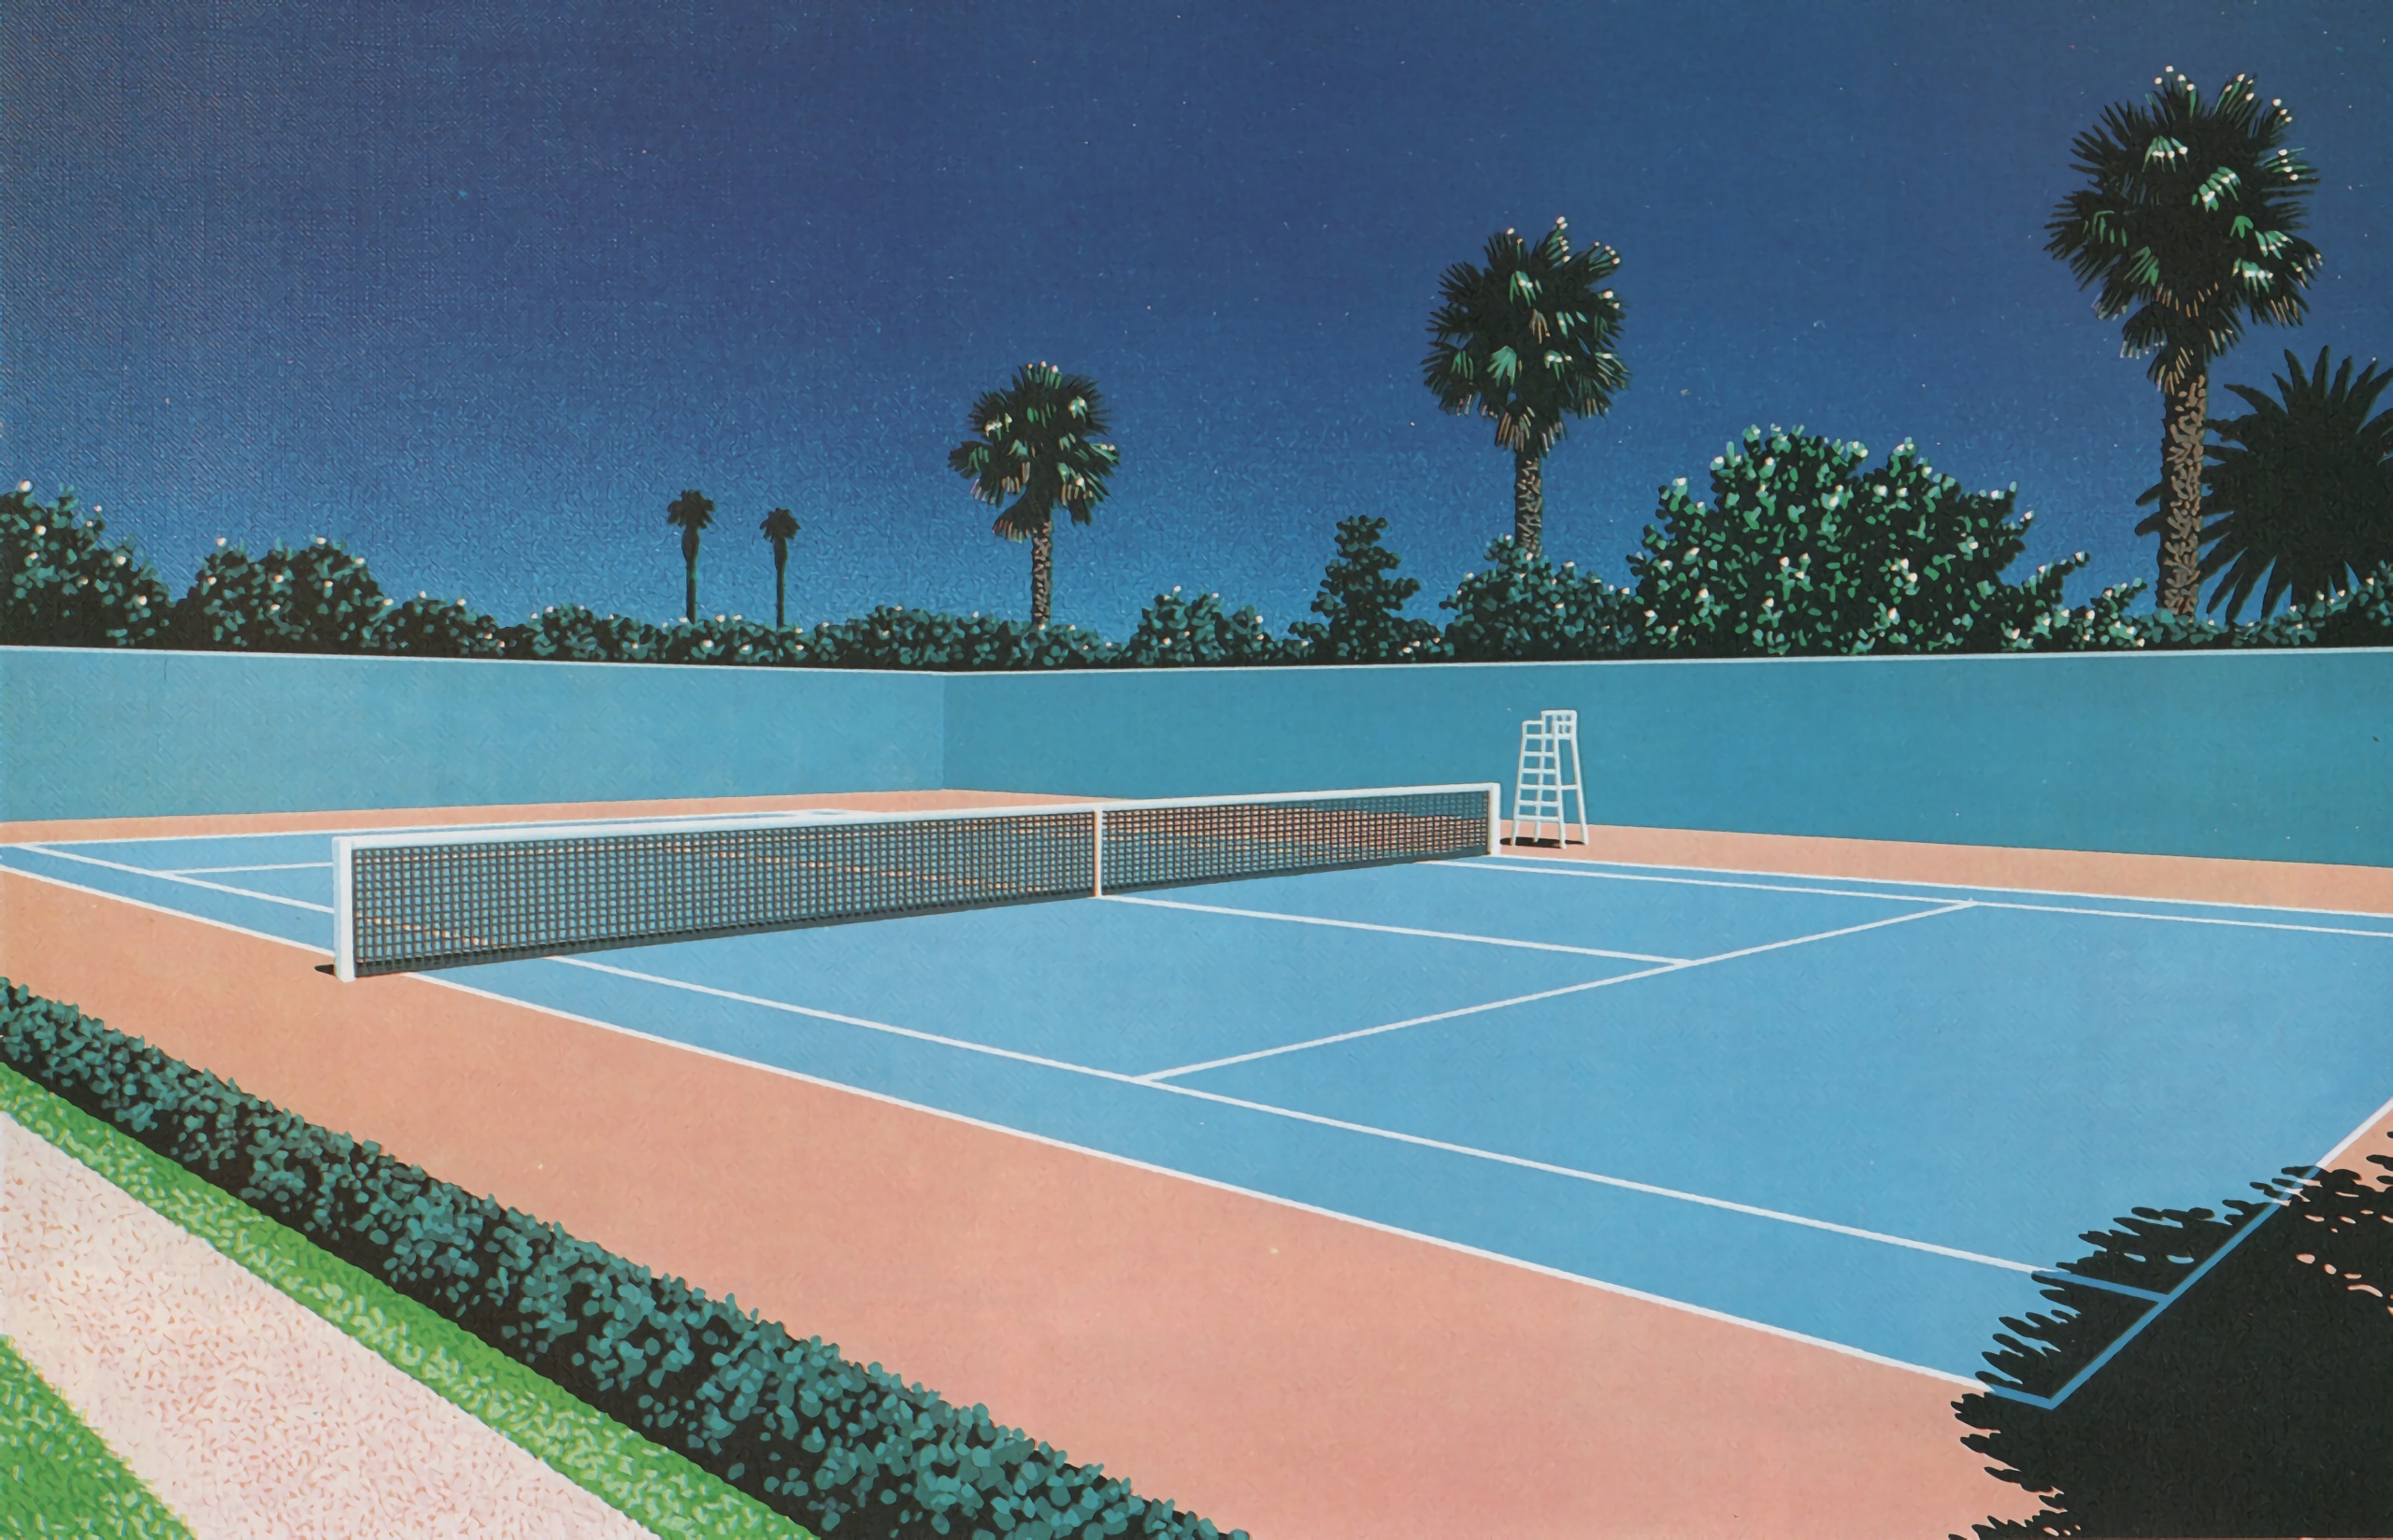 Painting Retrowave 1980s Tennis Court 2560x1648